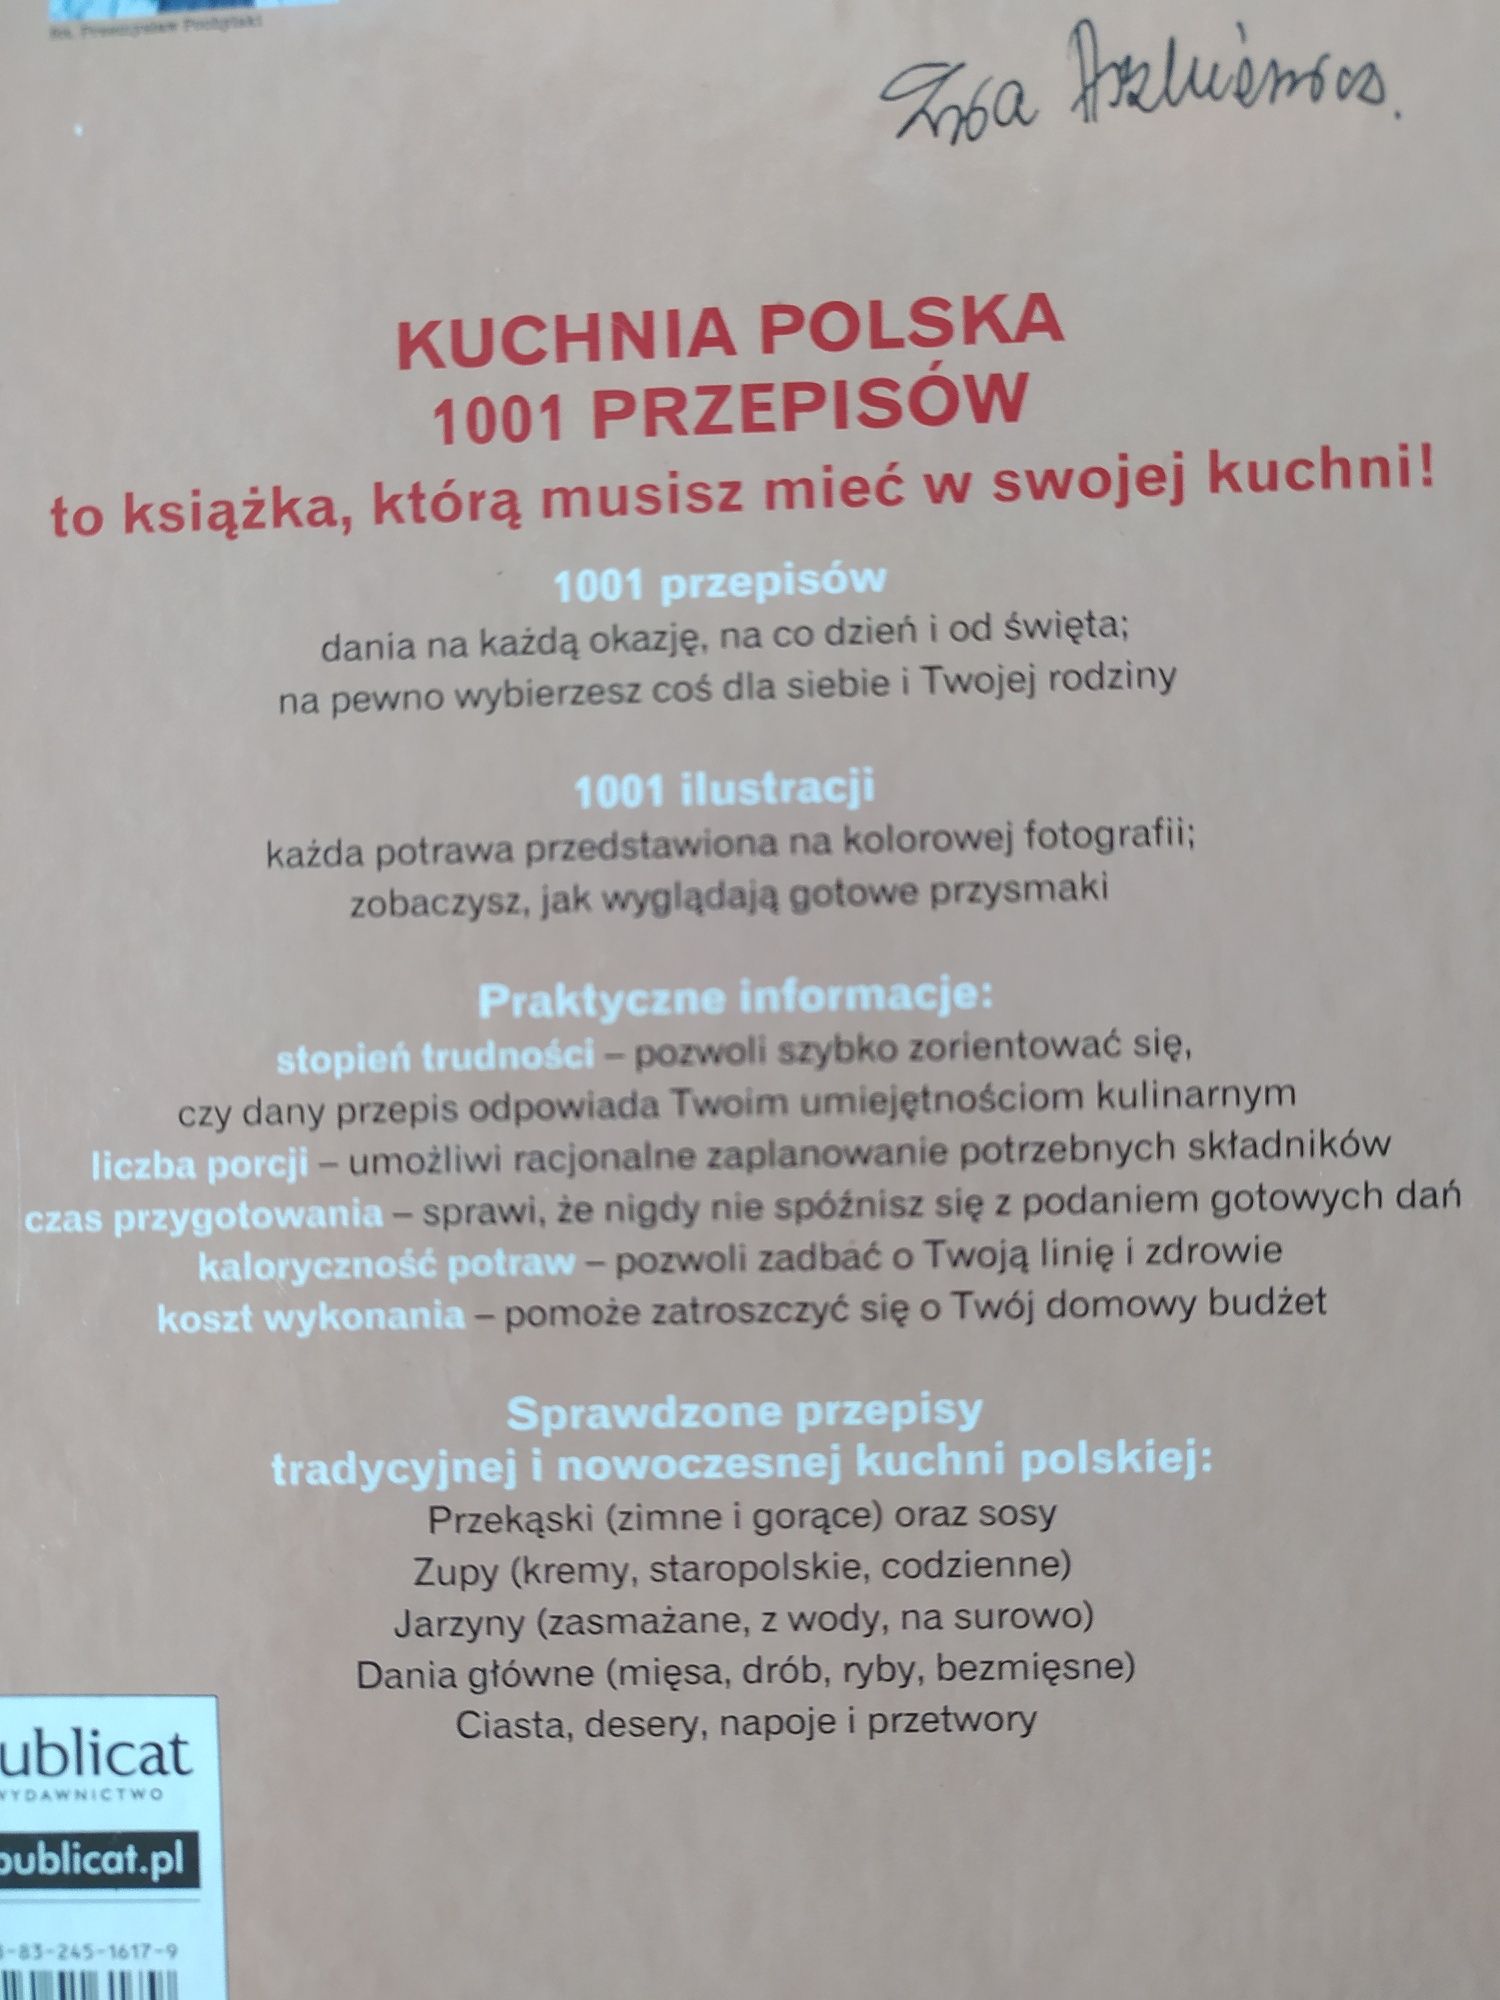 Książka kucharska, kuchnia polska